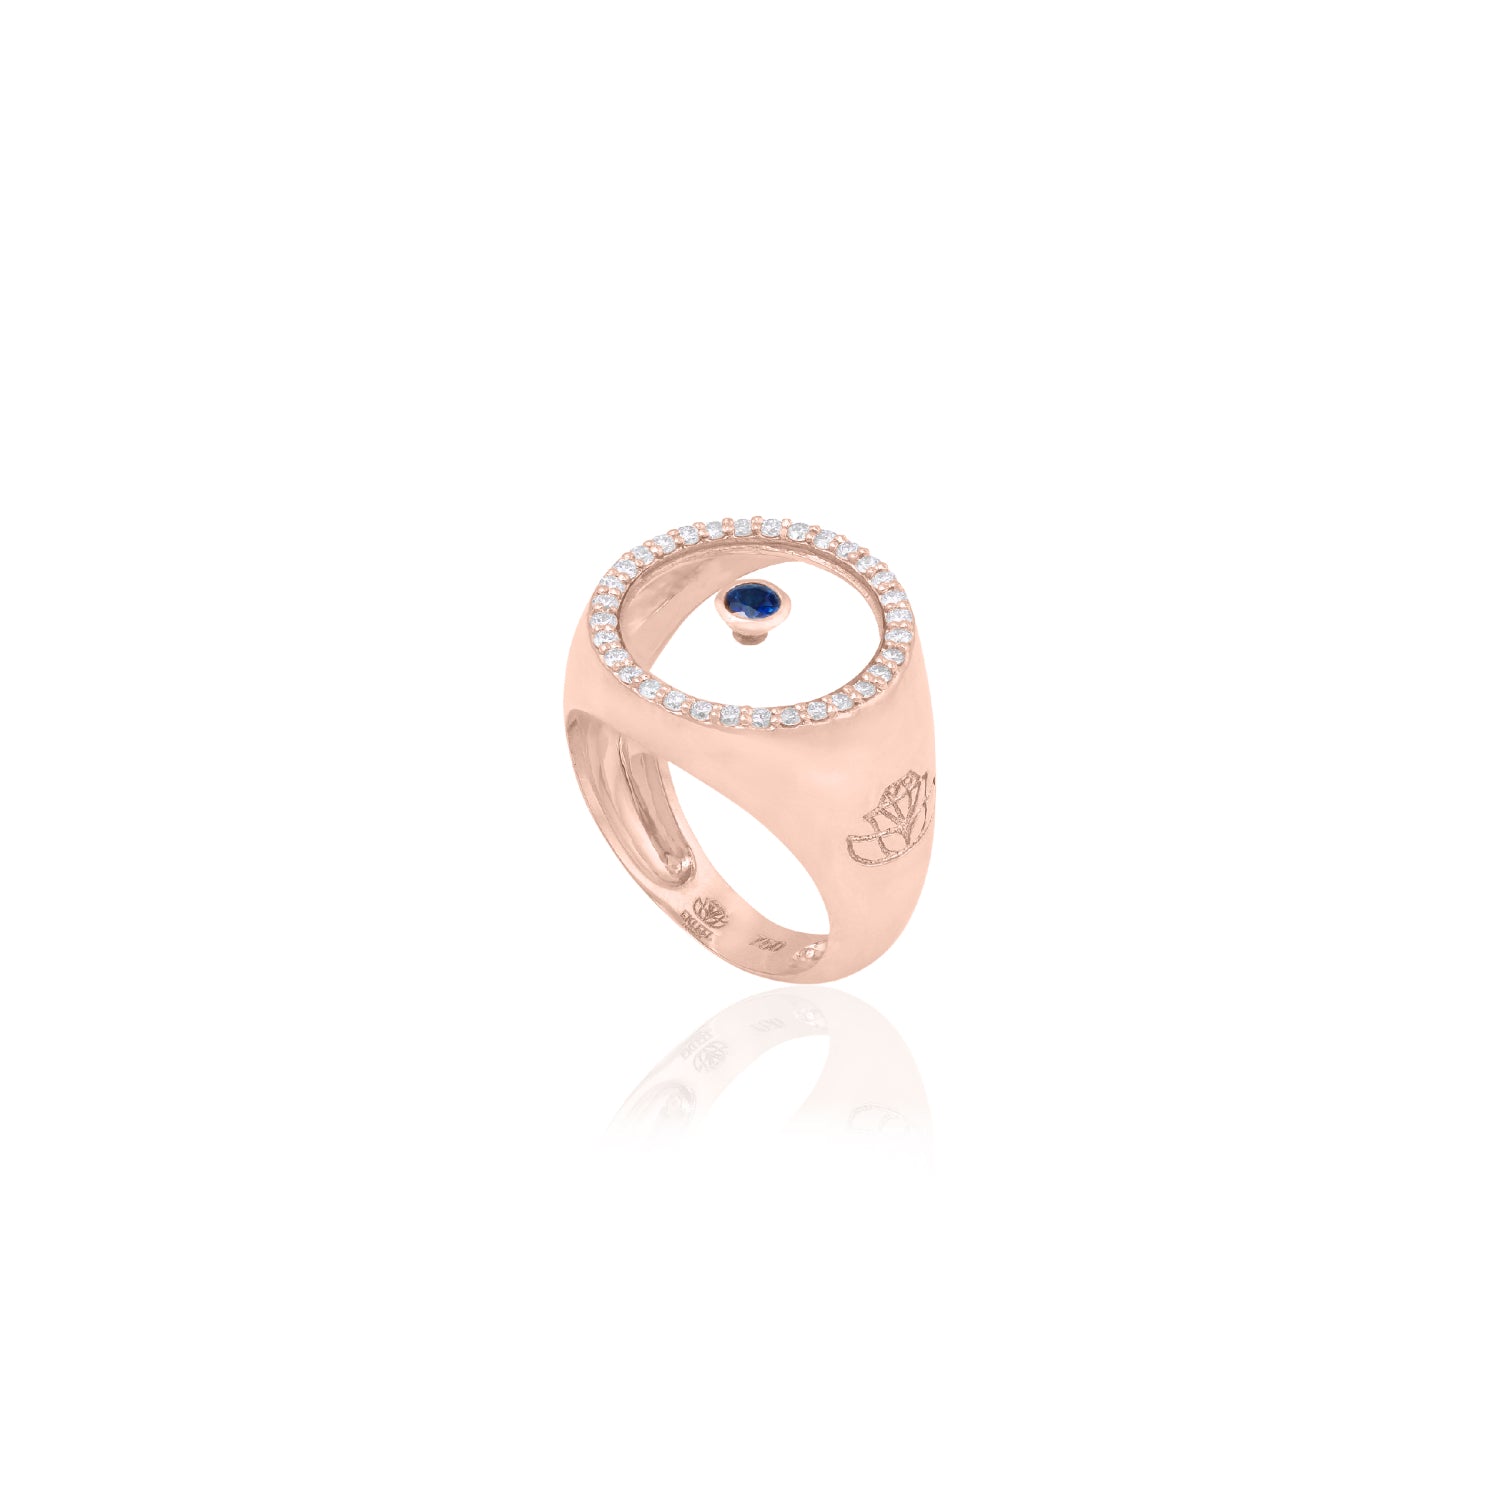 Sapphire September Birthstone Ring in Rose Gold